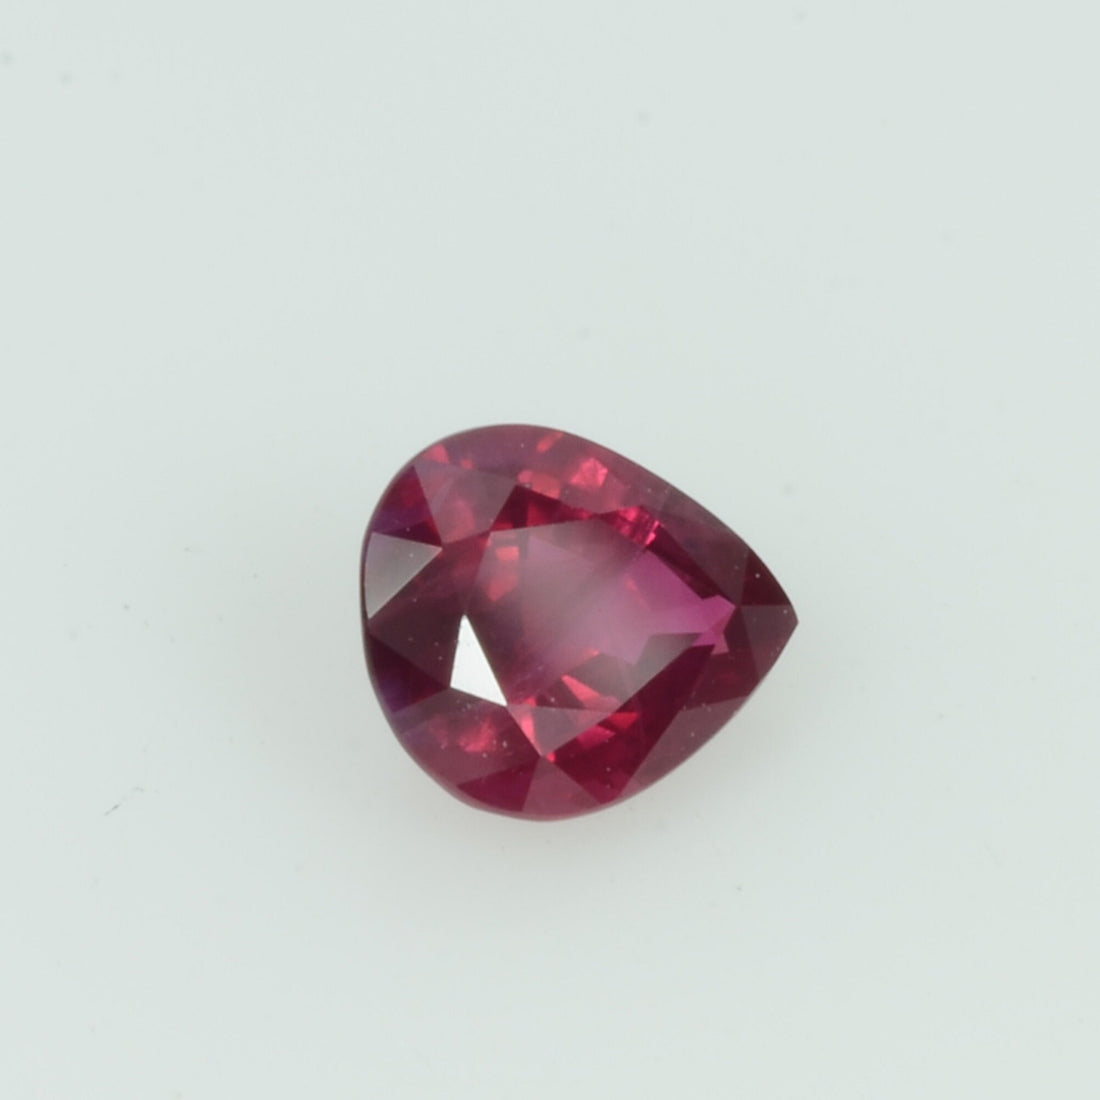 0.42 cts Natural Vietnam Ruby Loose Gemstone Pear Cut